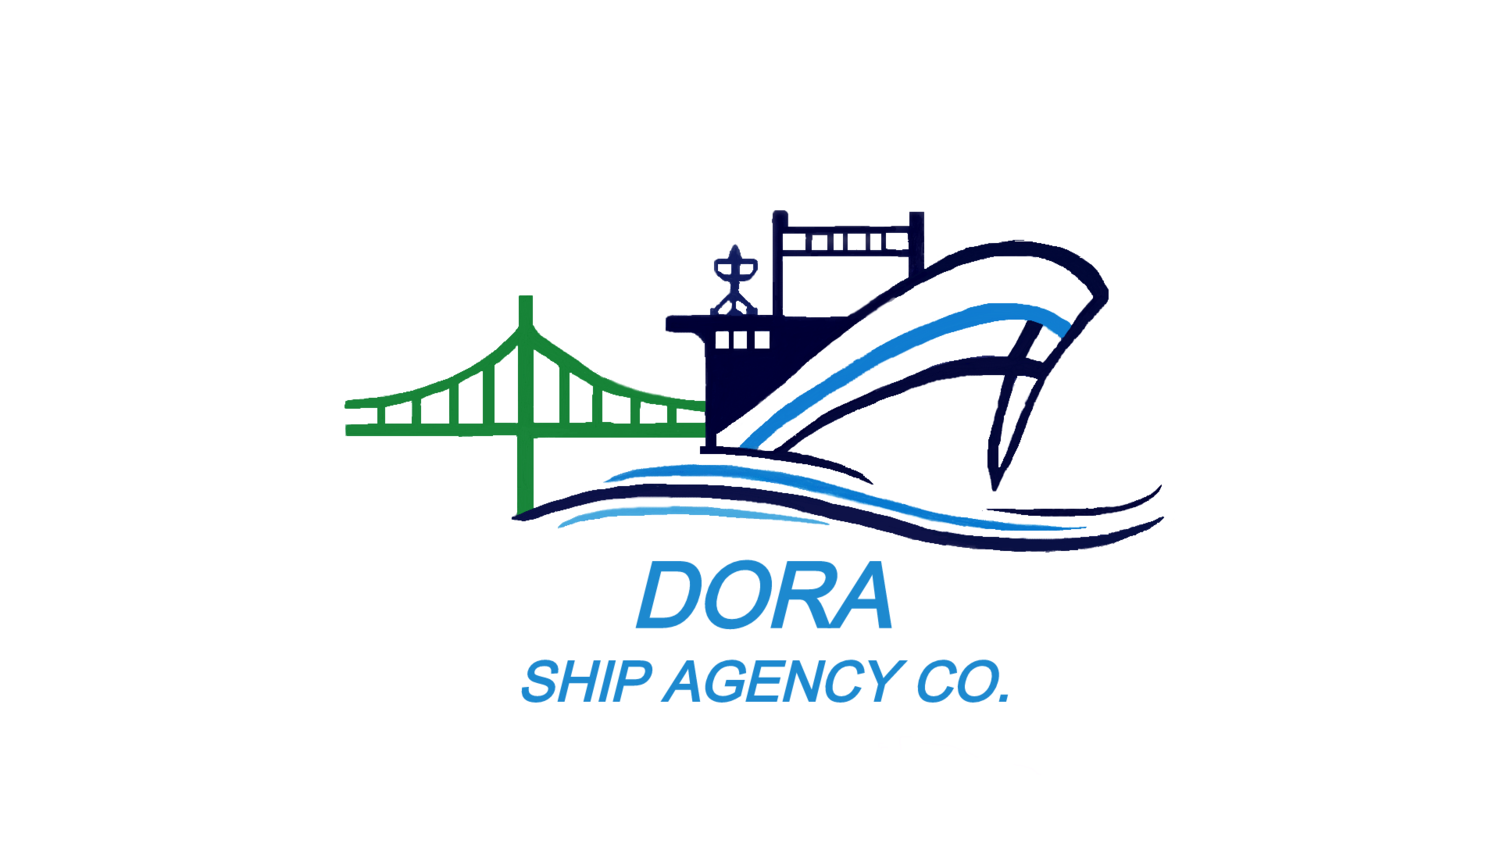 DORA SHIP AGENCY